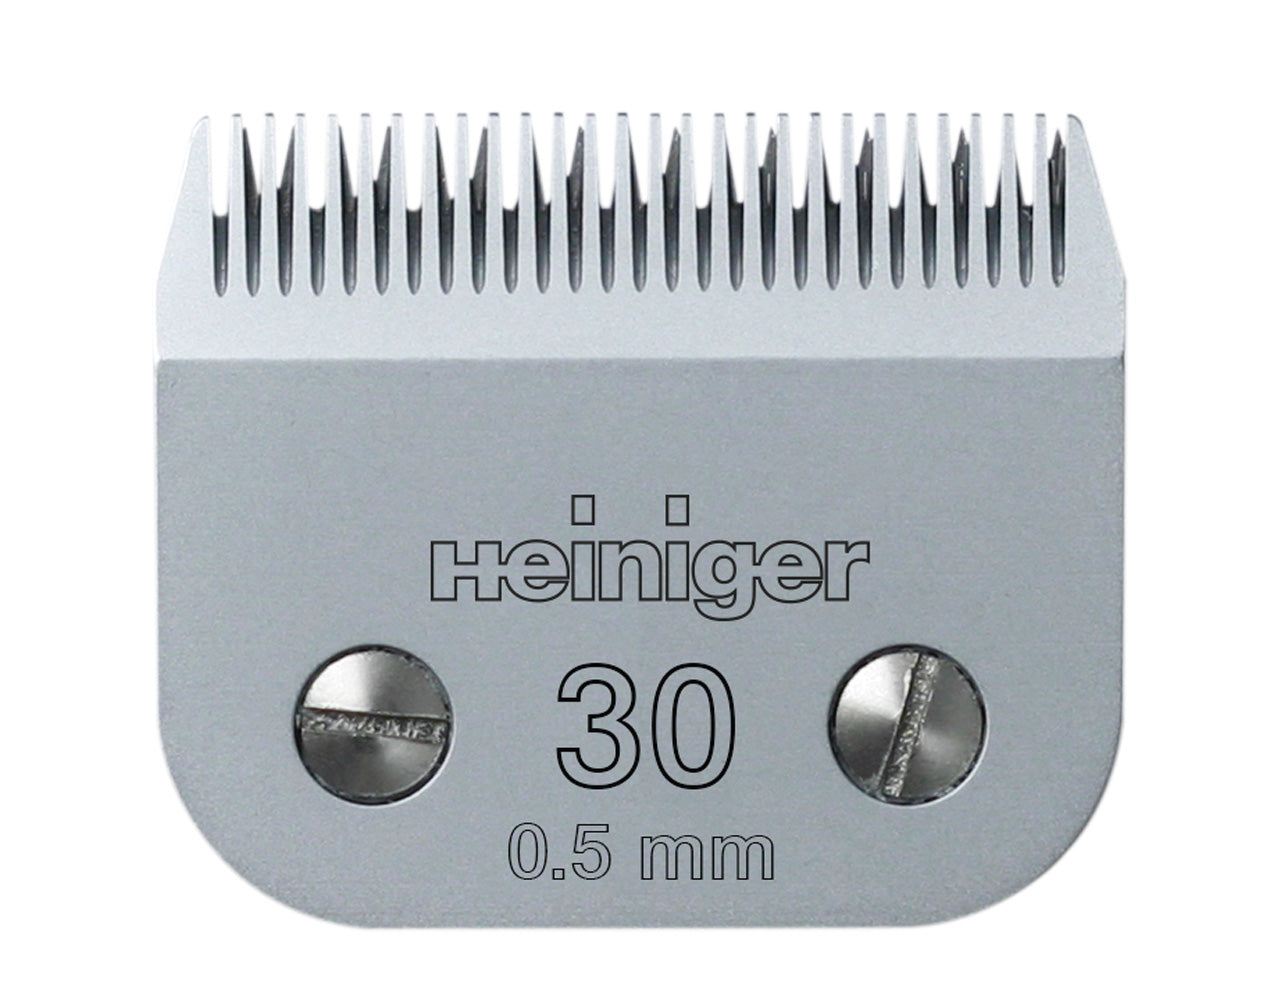 Heiniger- SCHERMESSER SAPHIR #30 / 0,5 MM